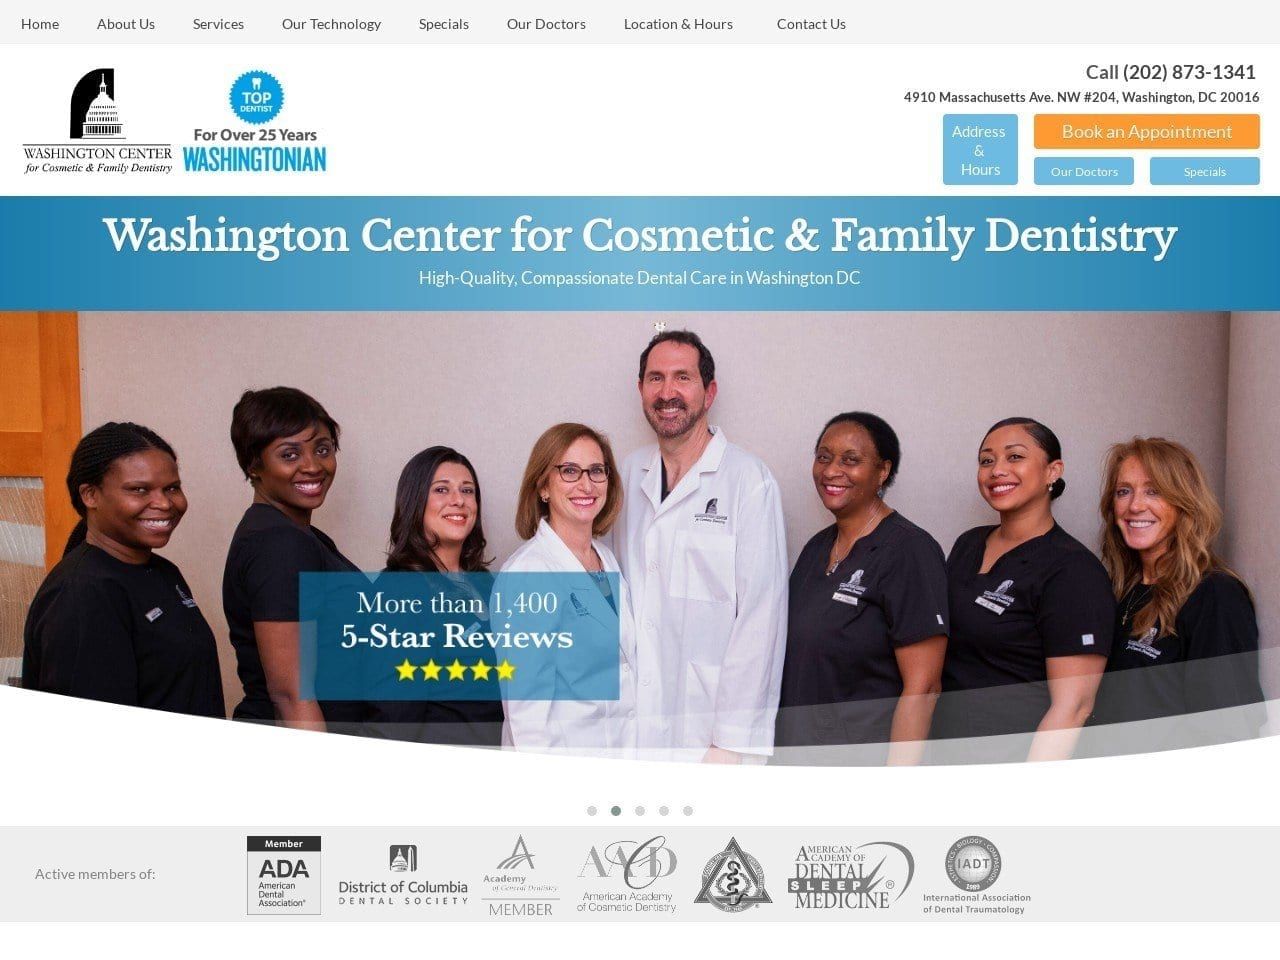 Washington Center For Cosmetic Dentistry Website Screenshot from amazingdentistry.com